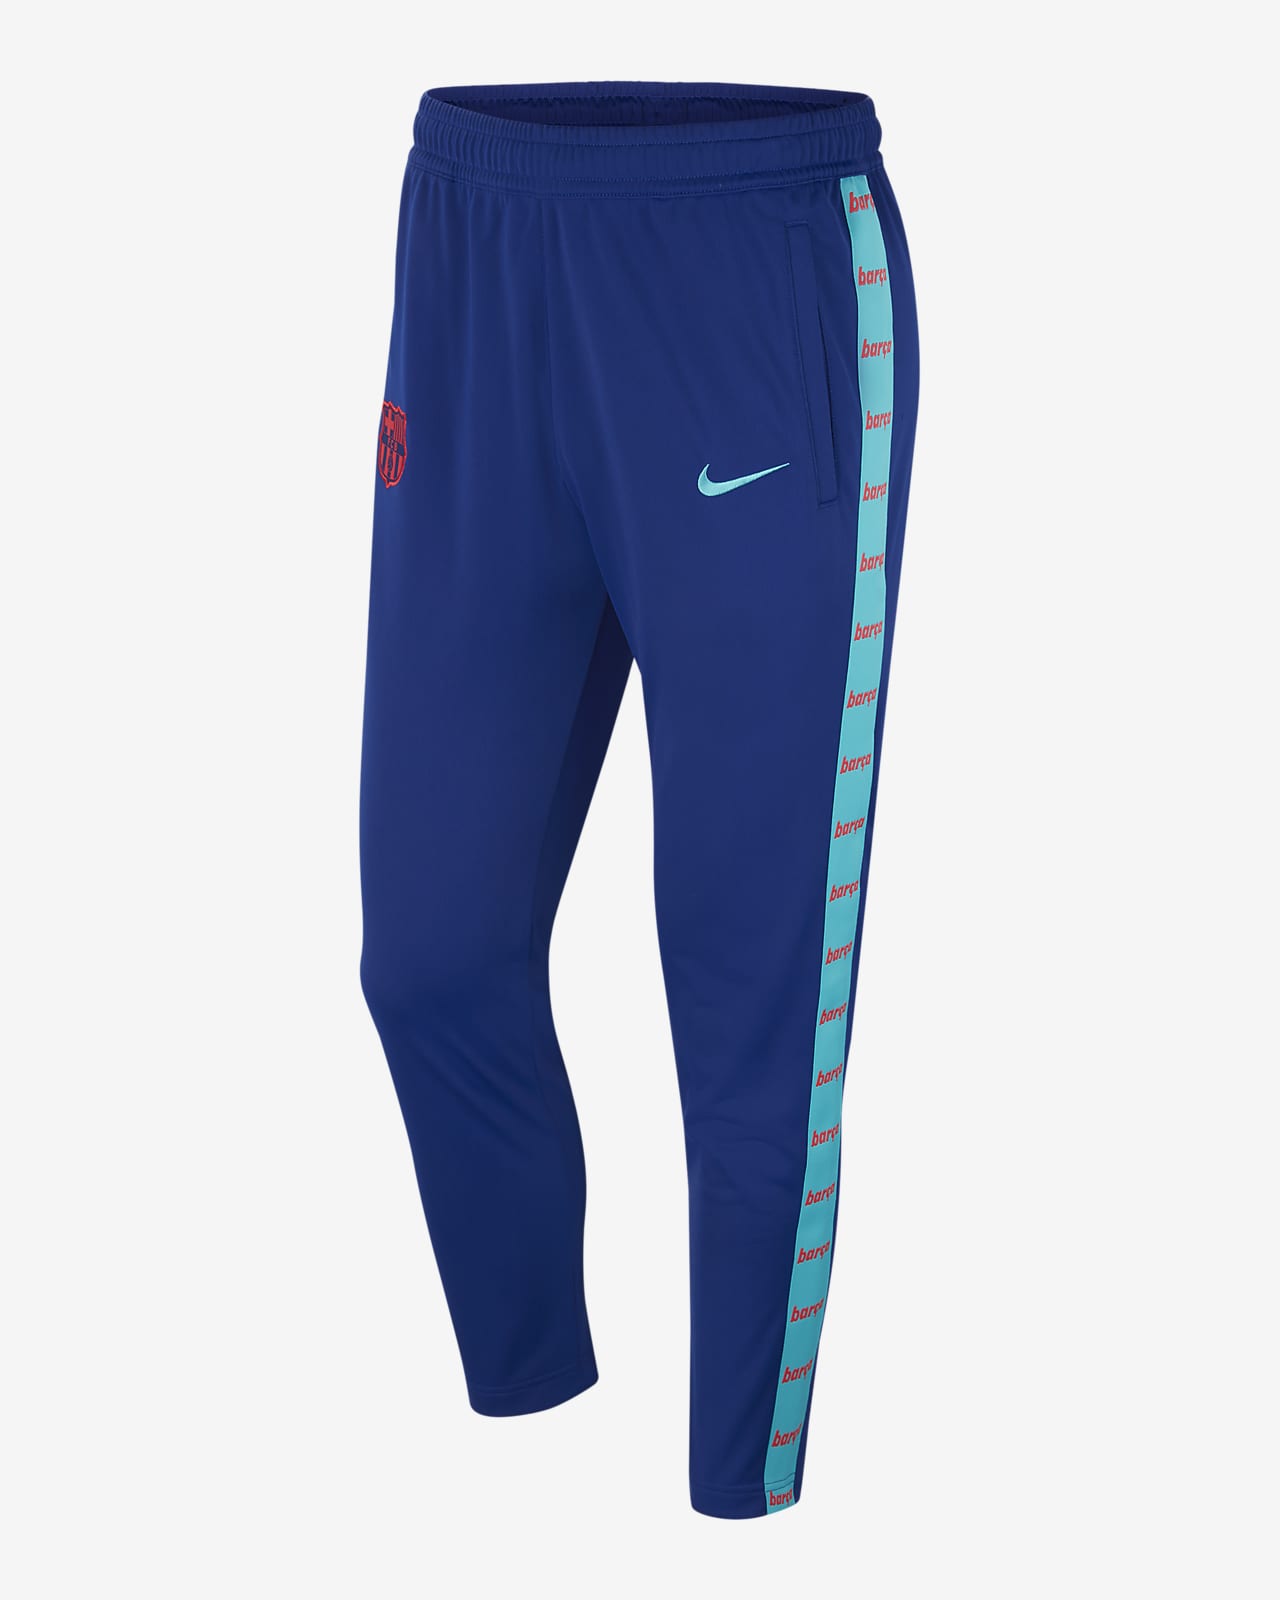 Pantalones para hombre FC Barcelona Nike.com